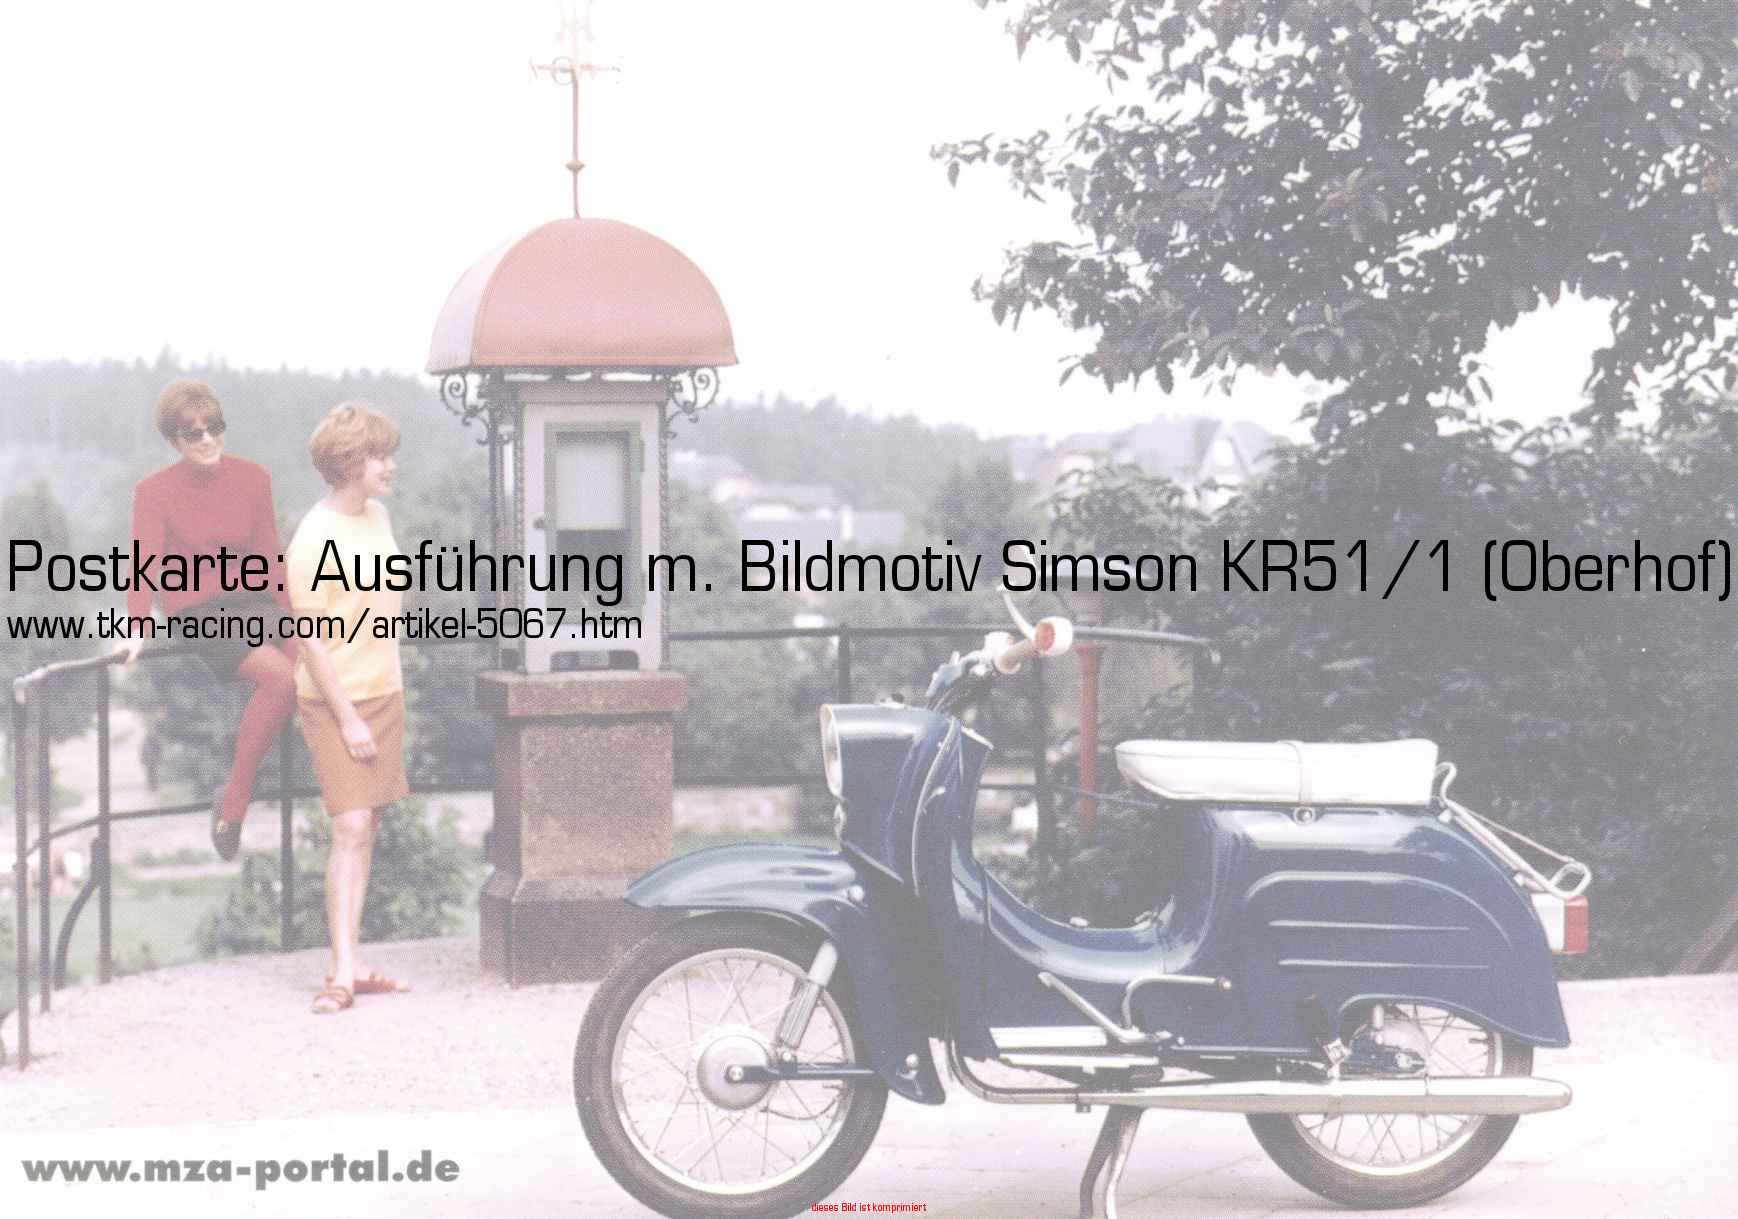 Bild vom Artikel Postkarte: Ausführung m. Bildmotiv Simson KR51/1 (Oberhof)